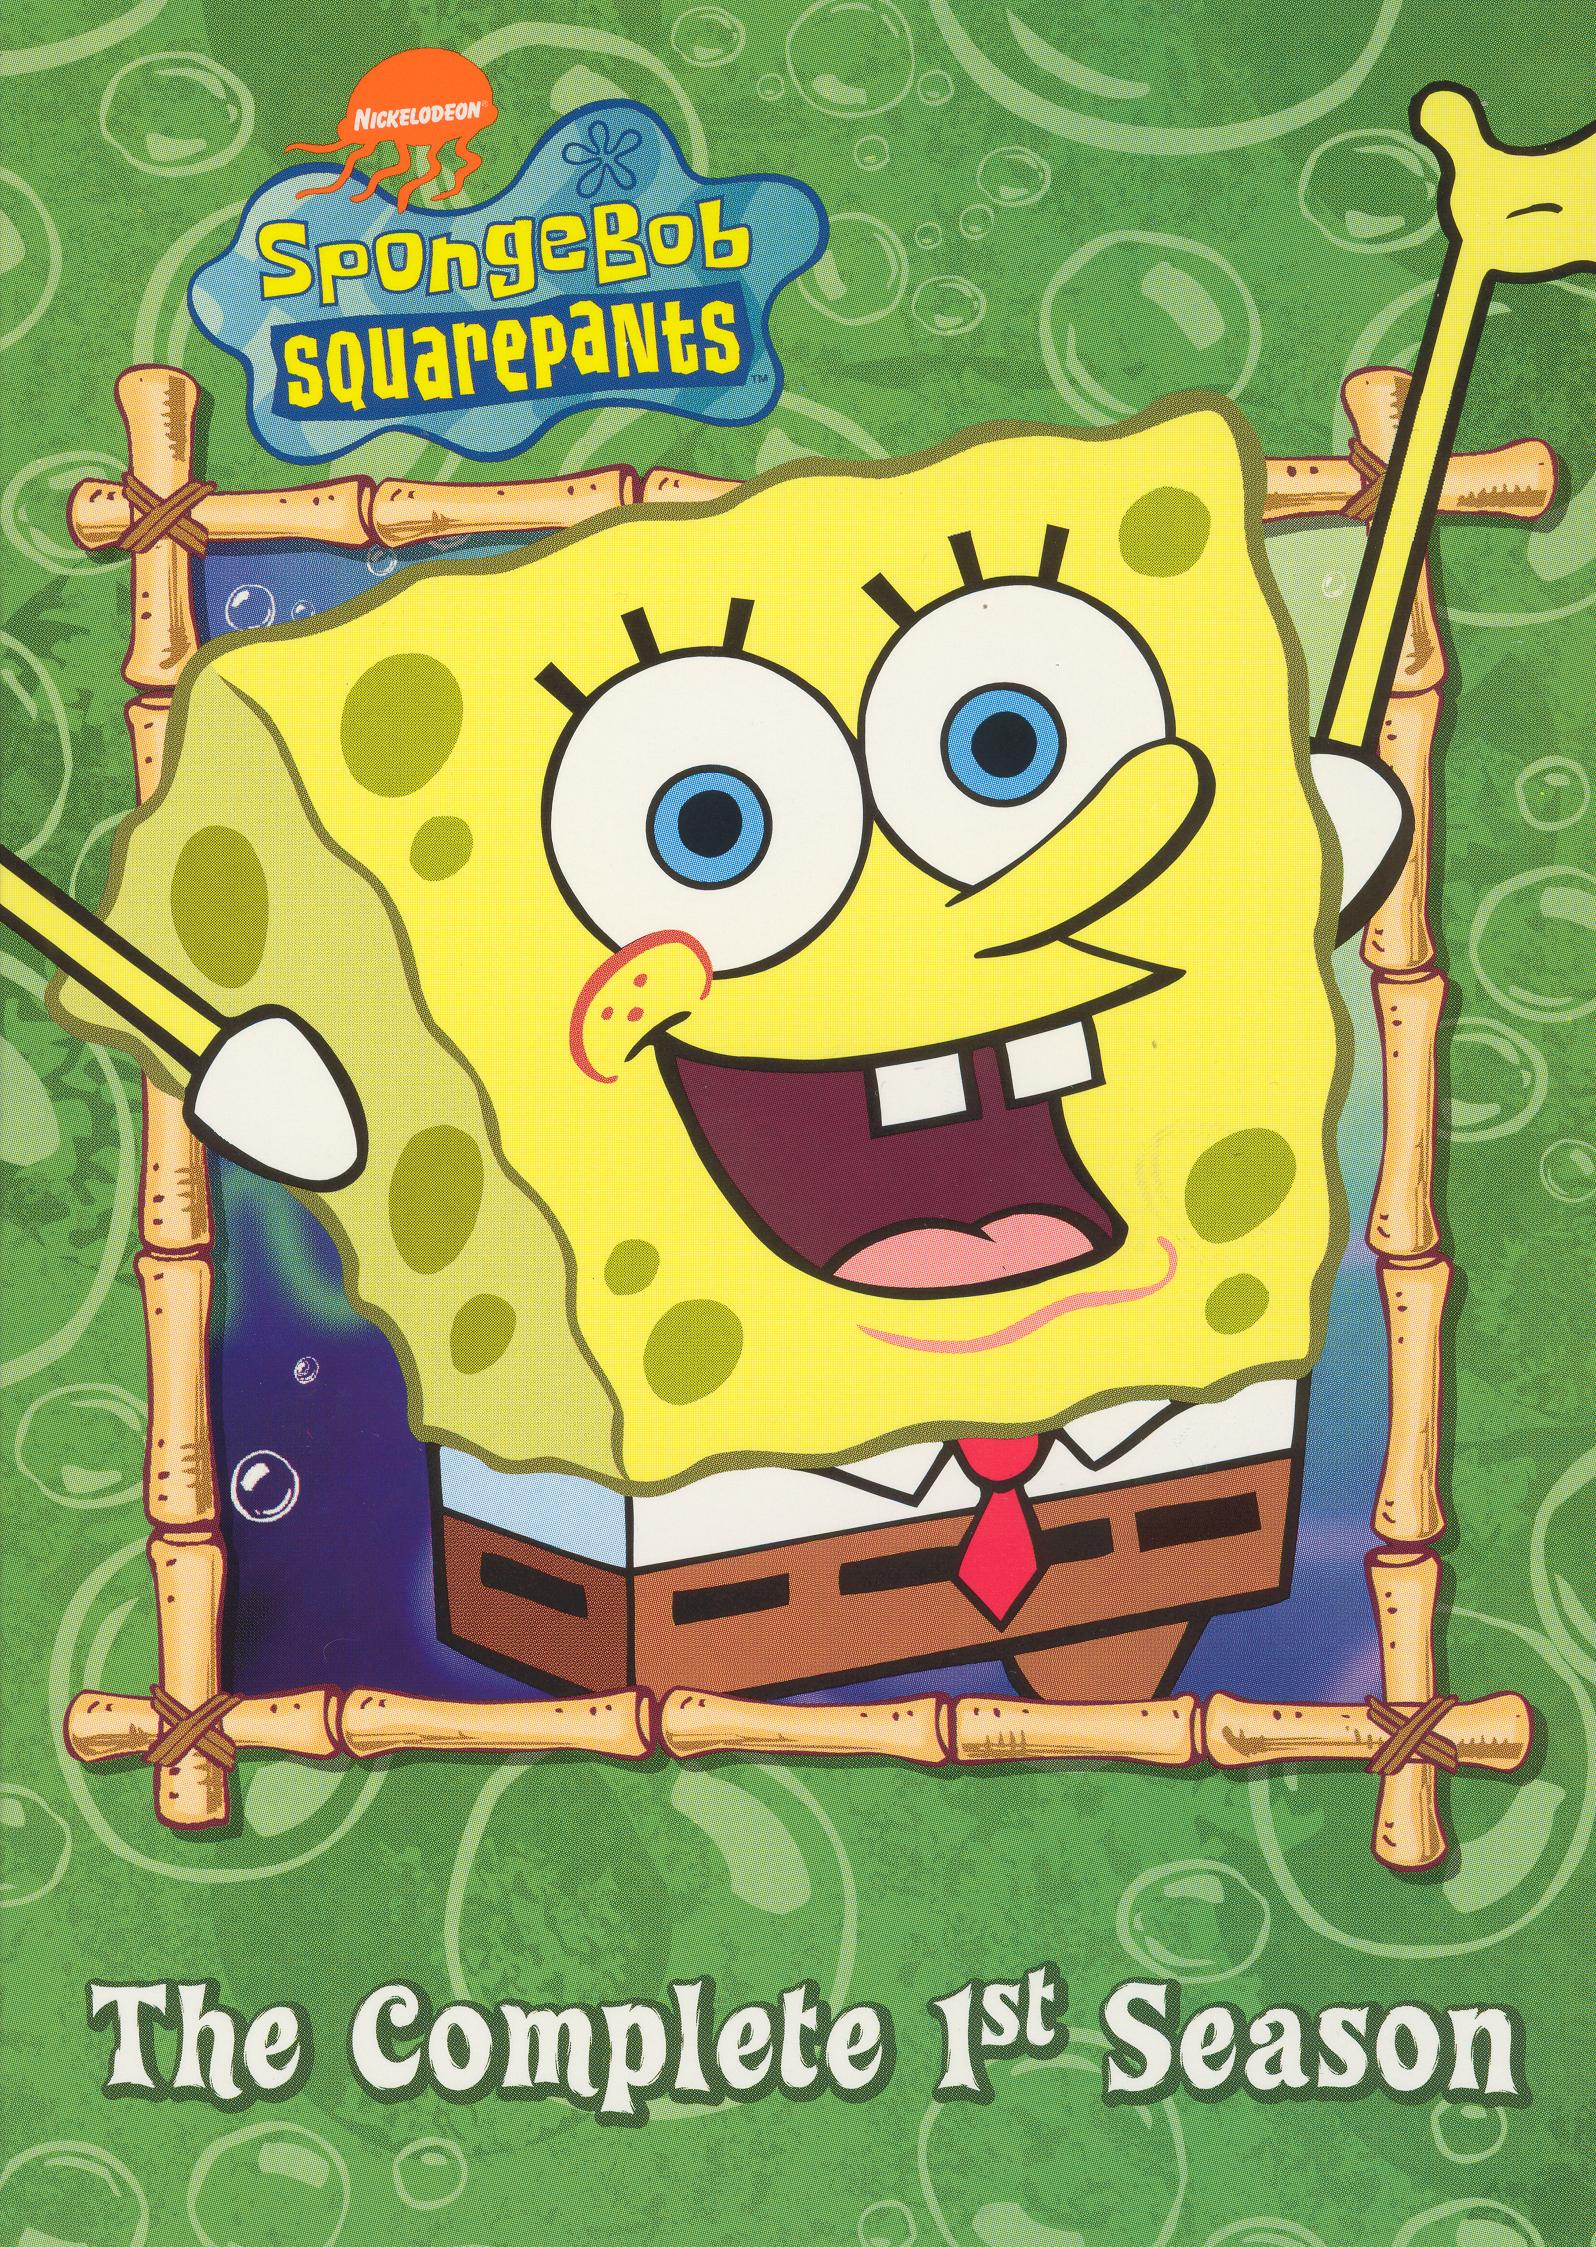 spongebob season 9 list of episodes on each disk